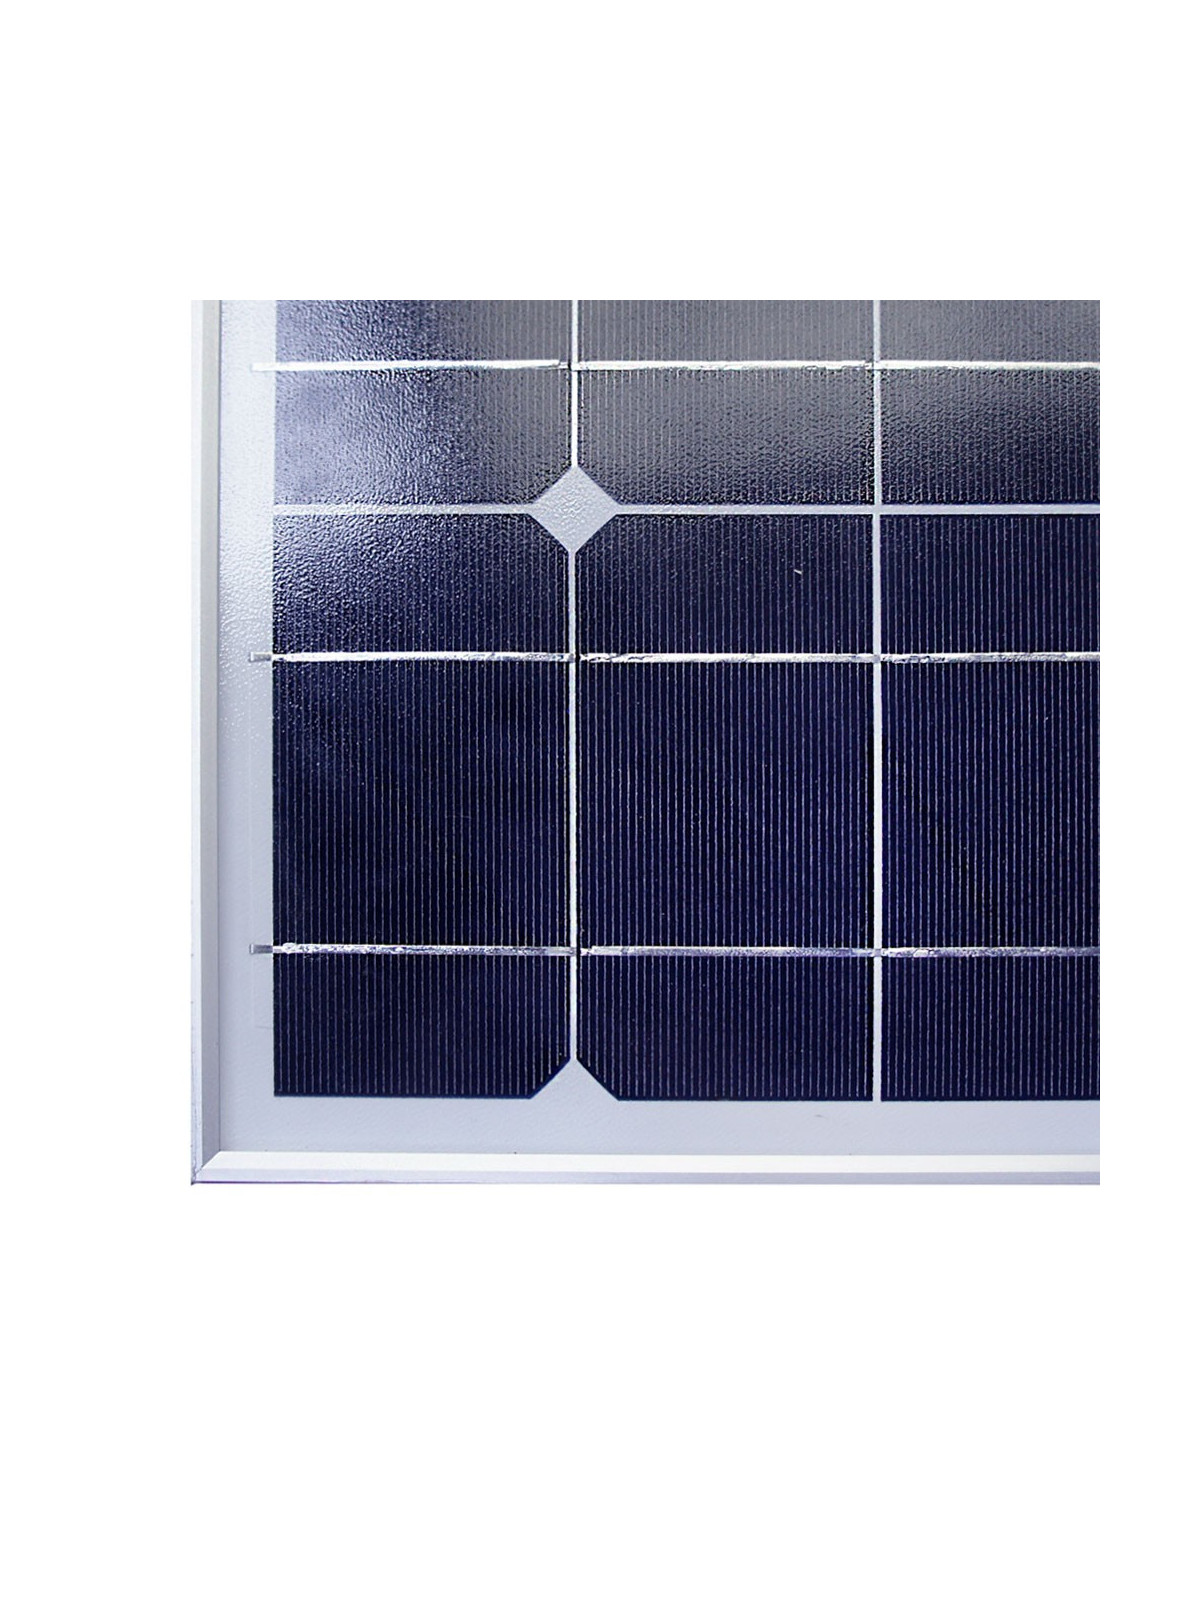 50Wp instelbaar fotovoltaïsch paneel